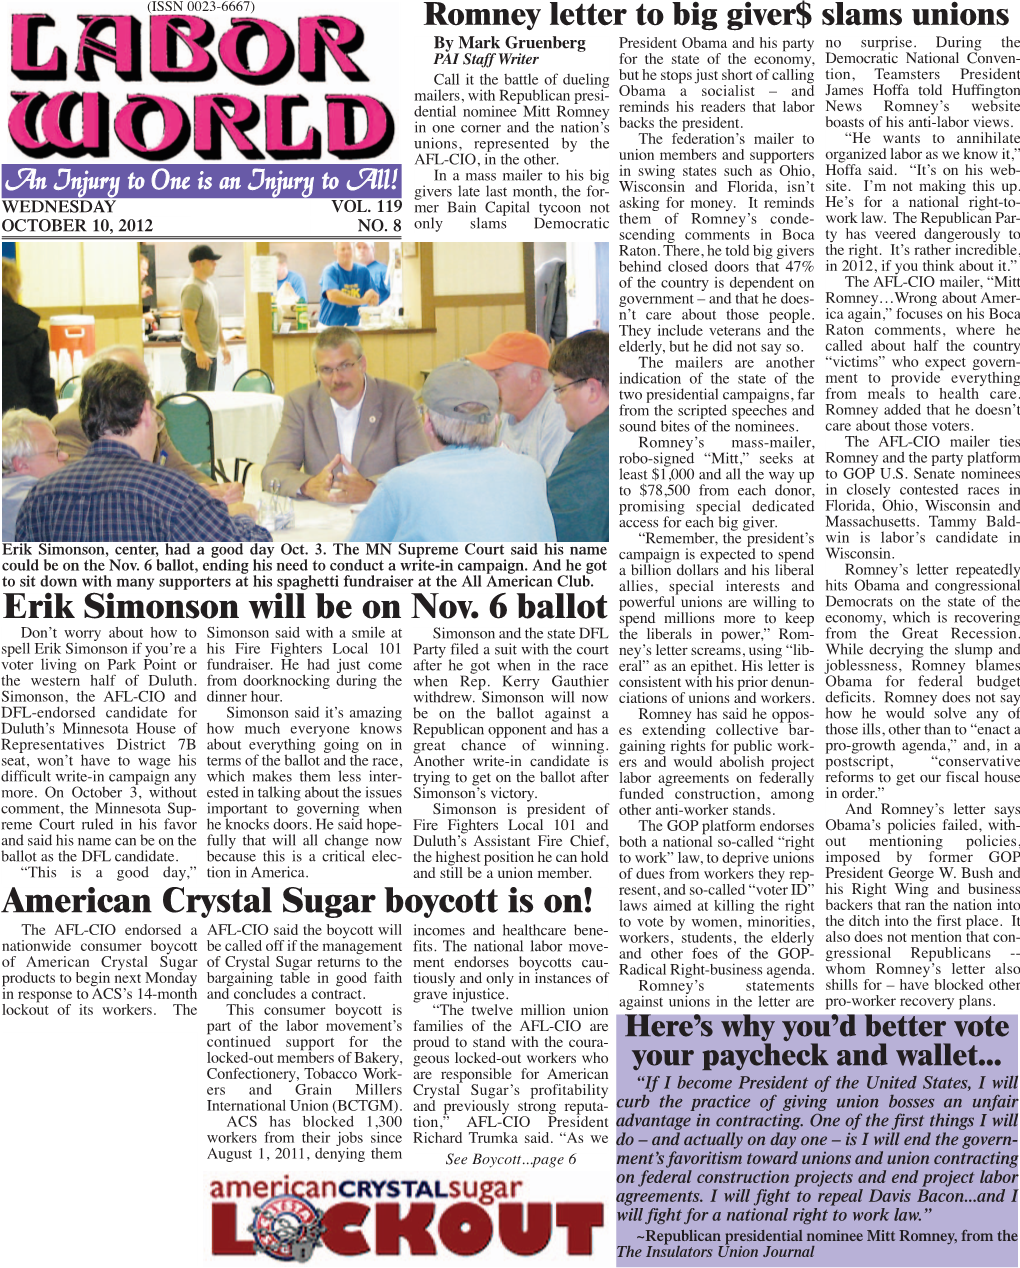 Erik Simonson Will Be on Nov. 6 Ballot American Crystal Sugar Boycott Is